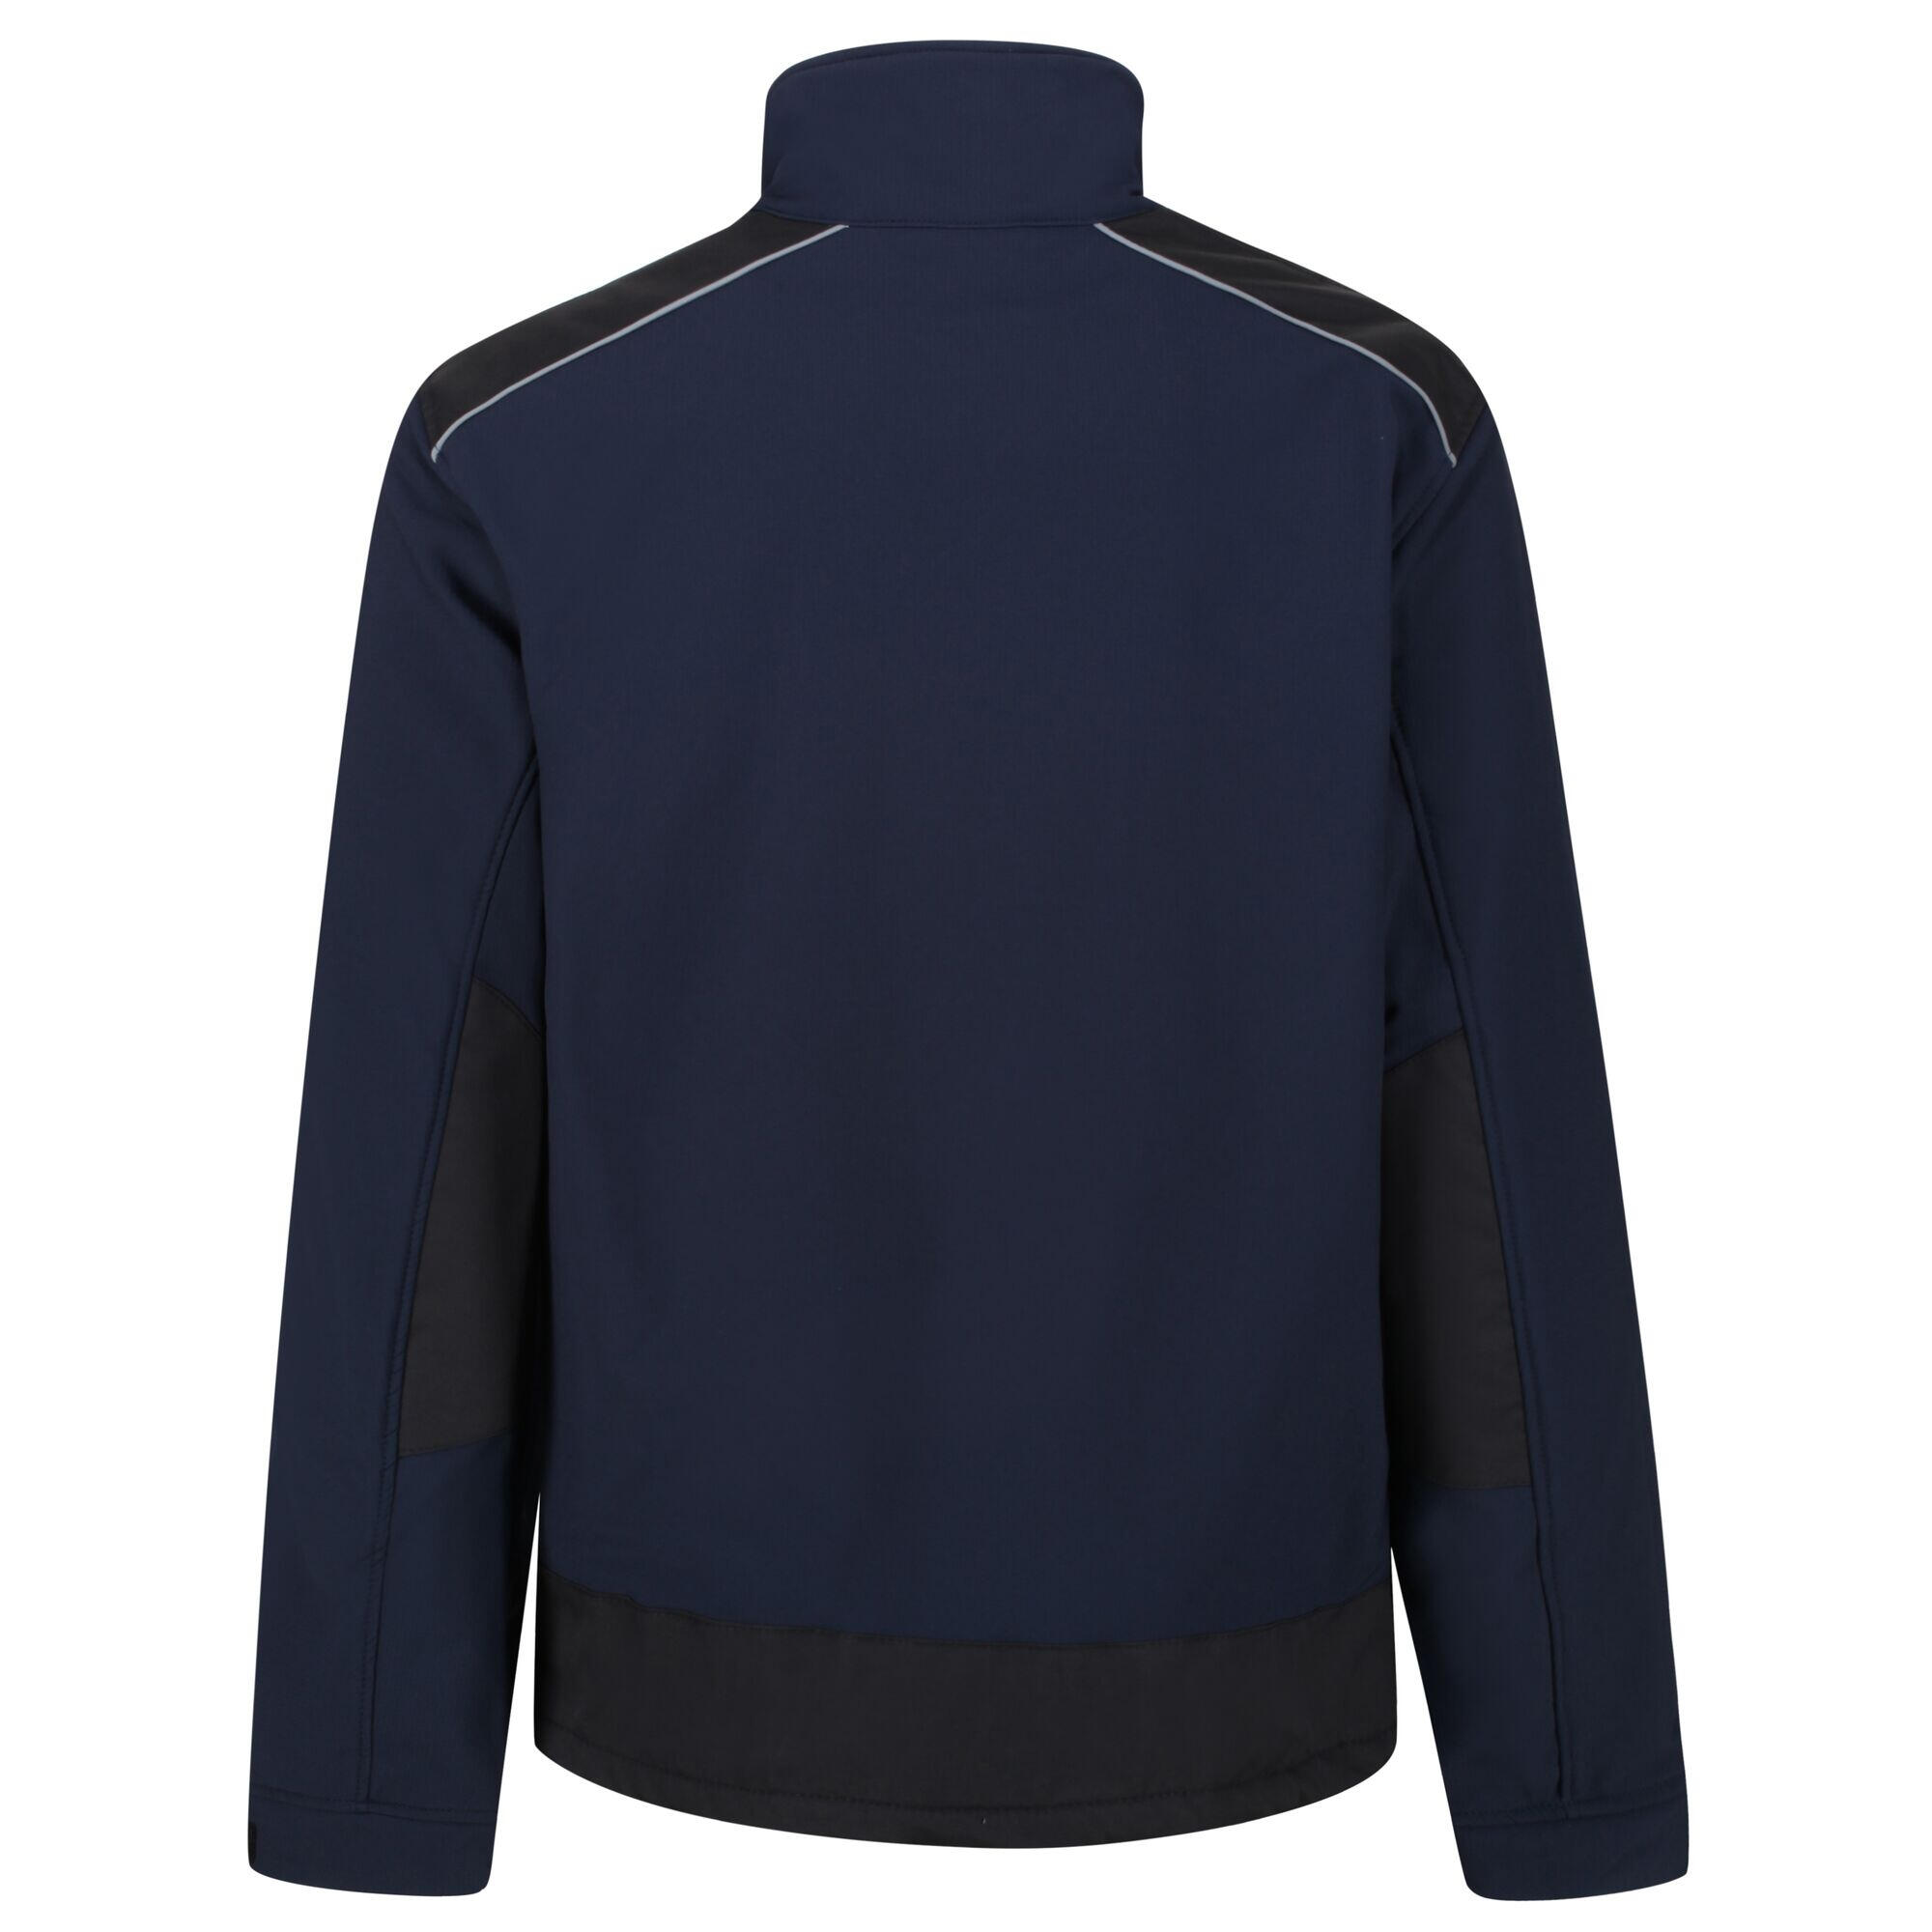 Mens Sandstorm Workwear Softshell Jacket (Navy/Black) 2/4